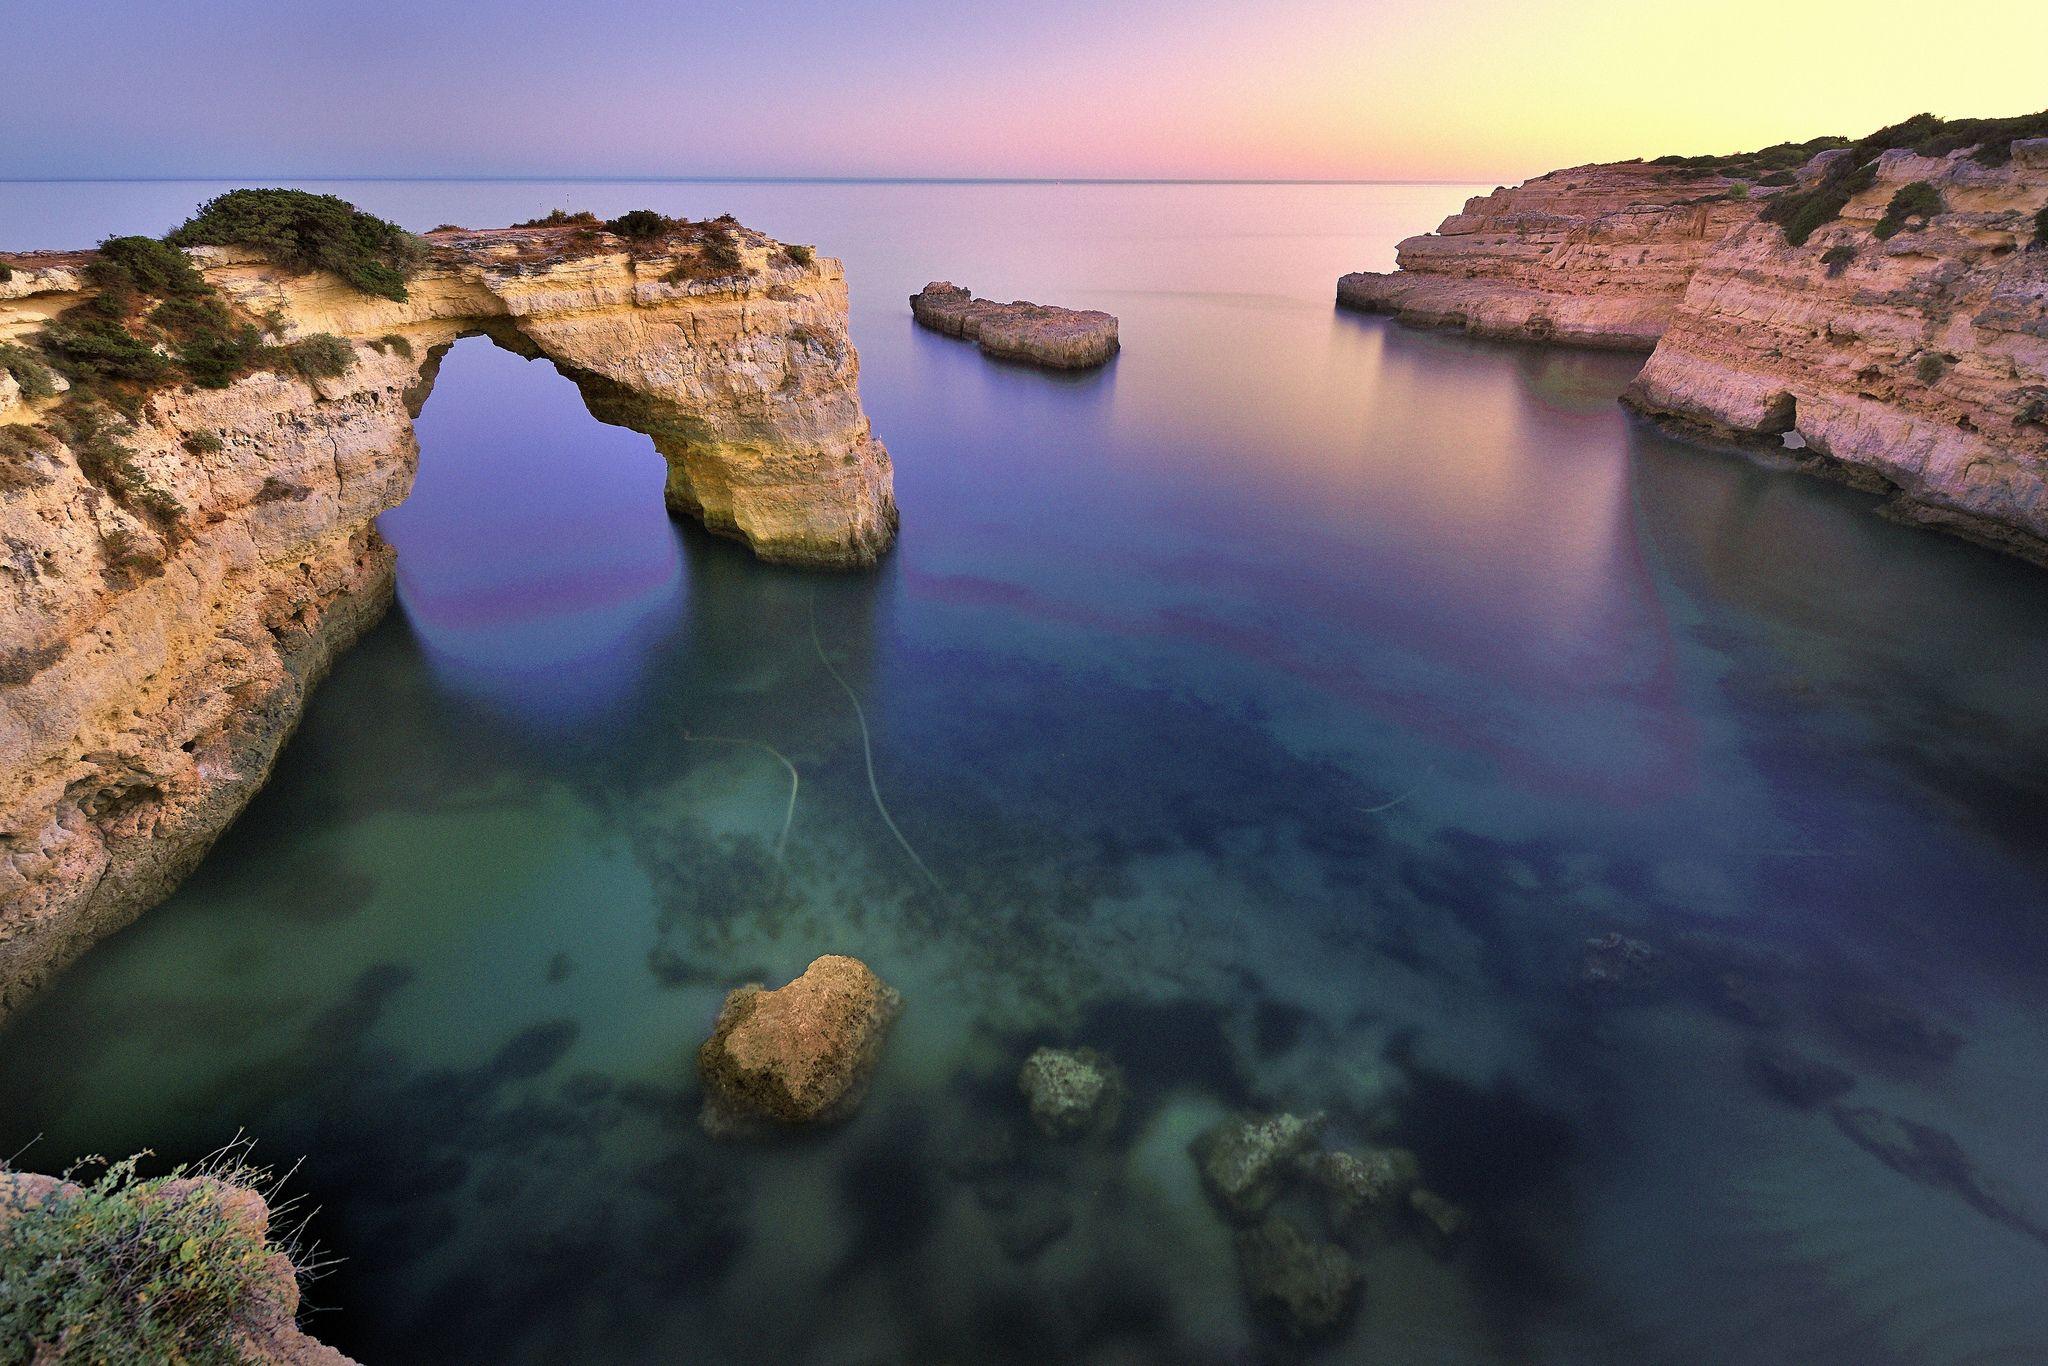 Algarve Wallpapers Top Free Algarve Backgrounds Wallpaperaccess